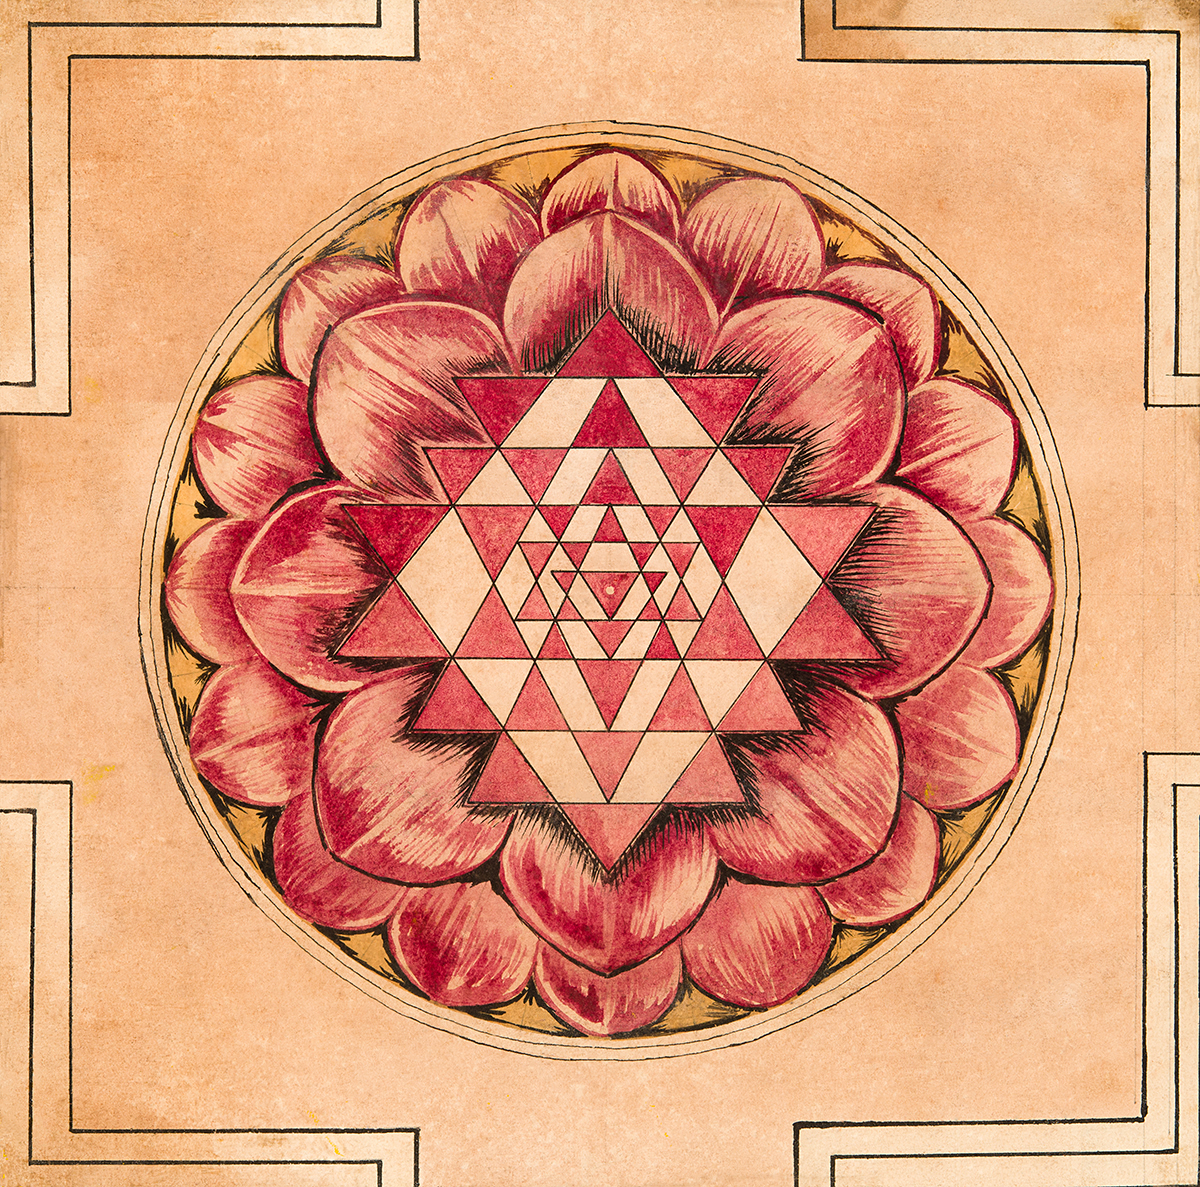 11 MB hires color image of Sri Cakra, drawn by Sri Ramana Maharshi